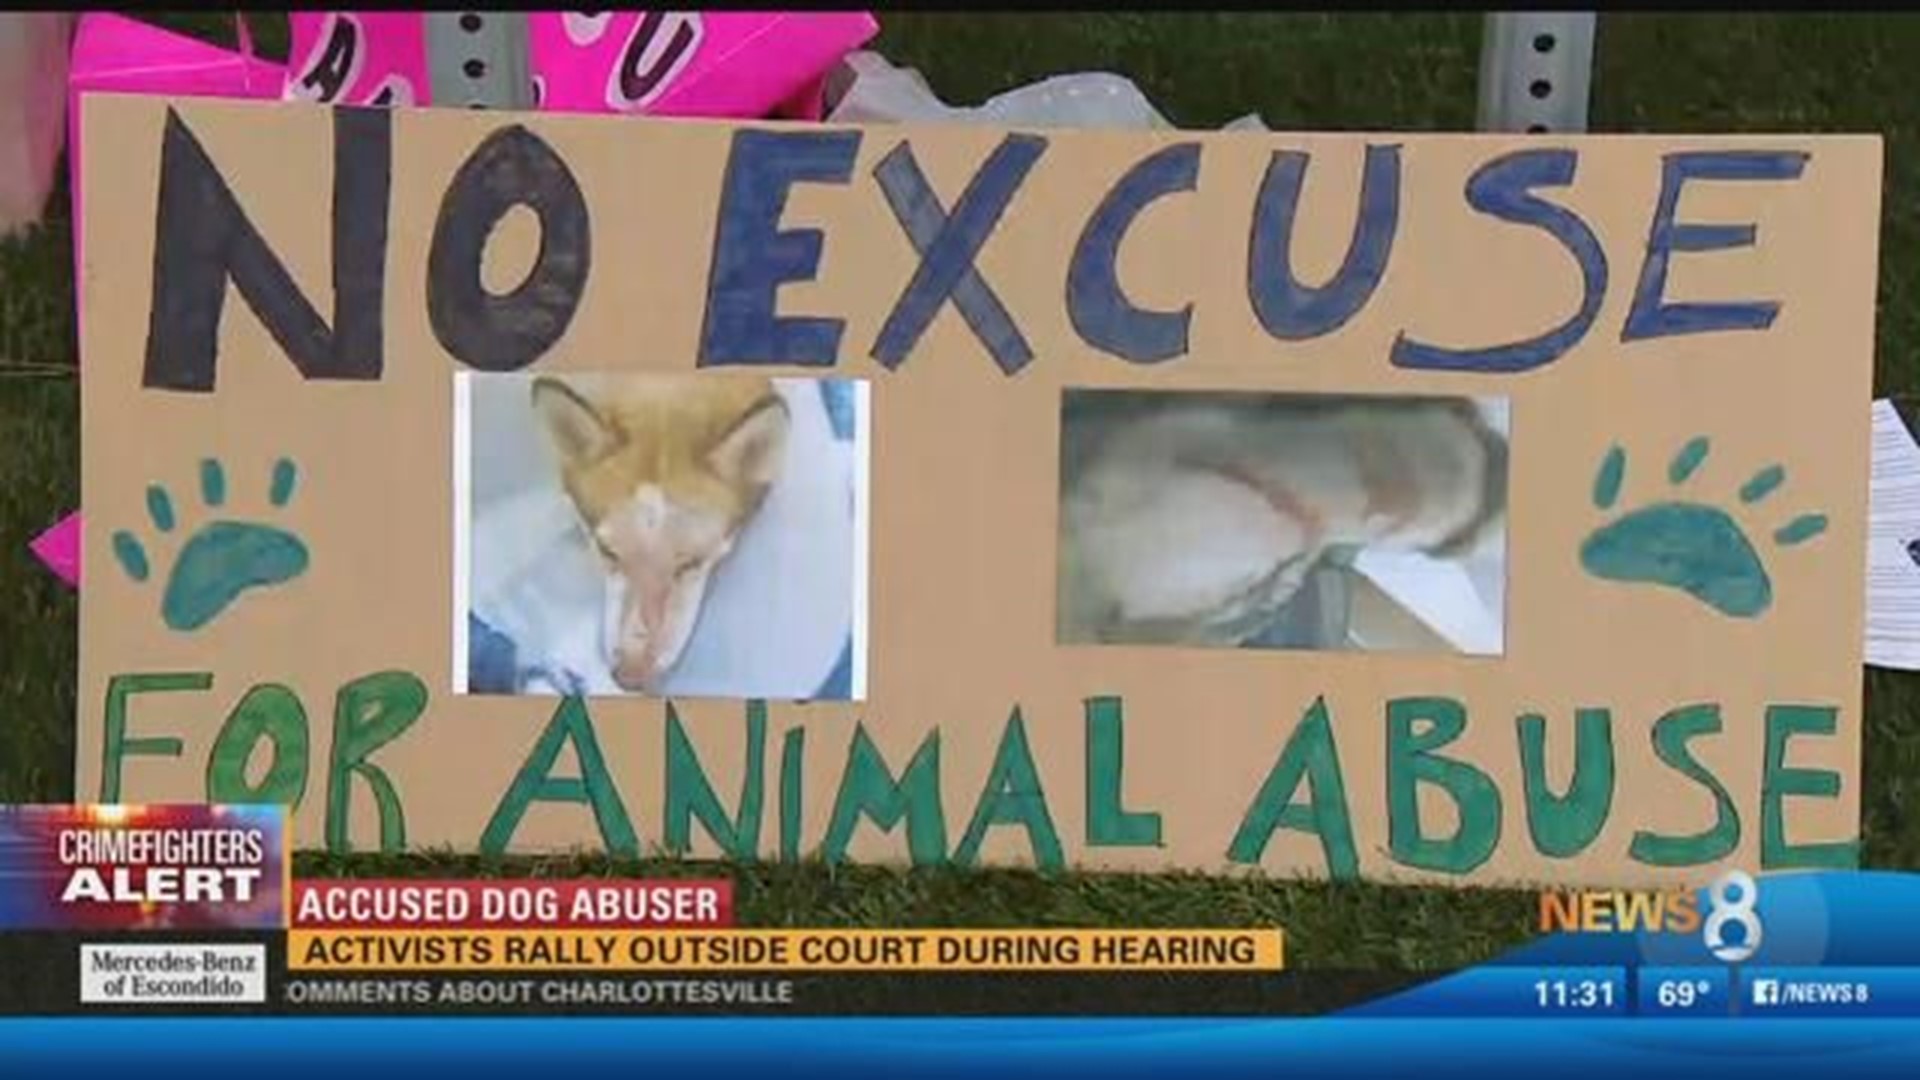 Accused Dog Abuser: Demonstrators say no excuse for animal abuse 